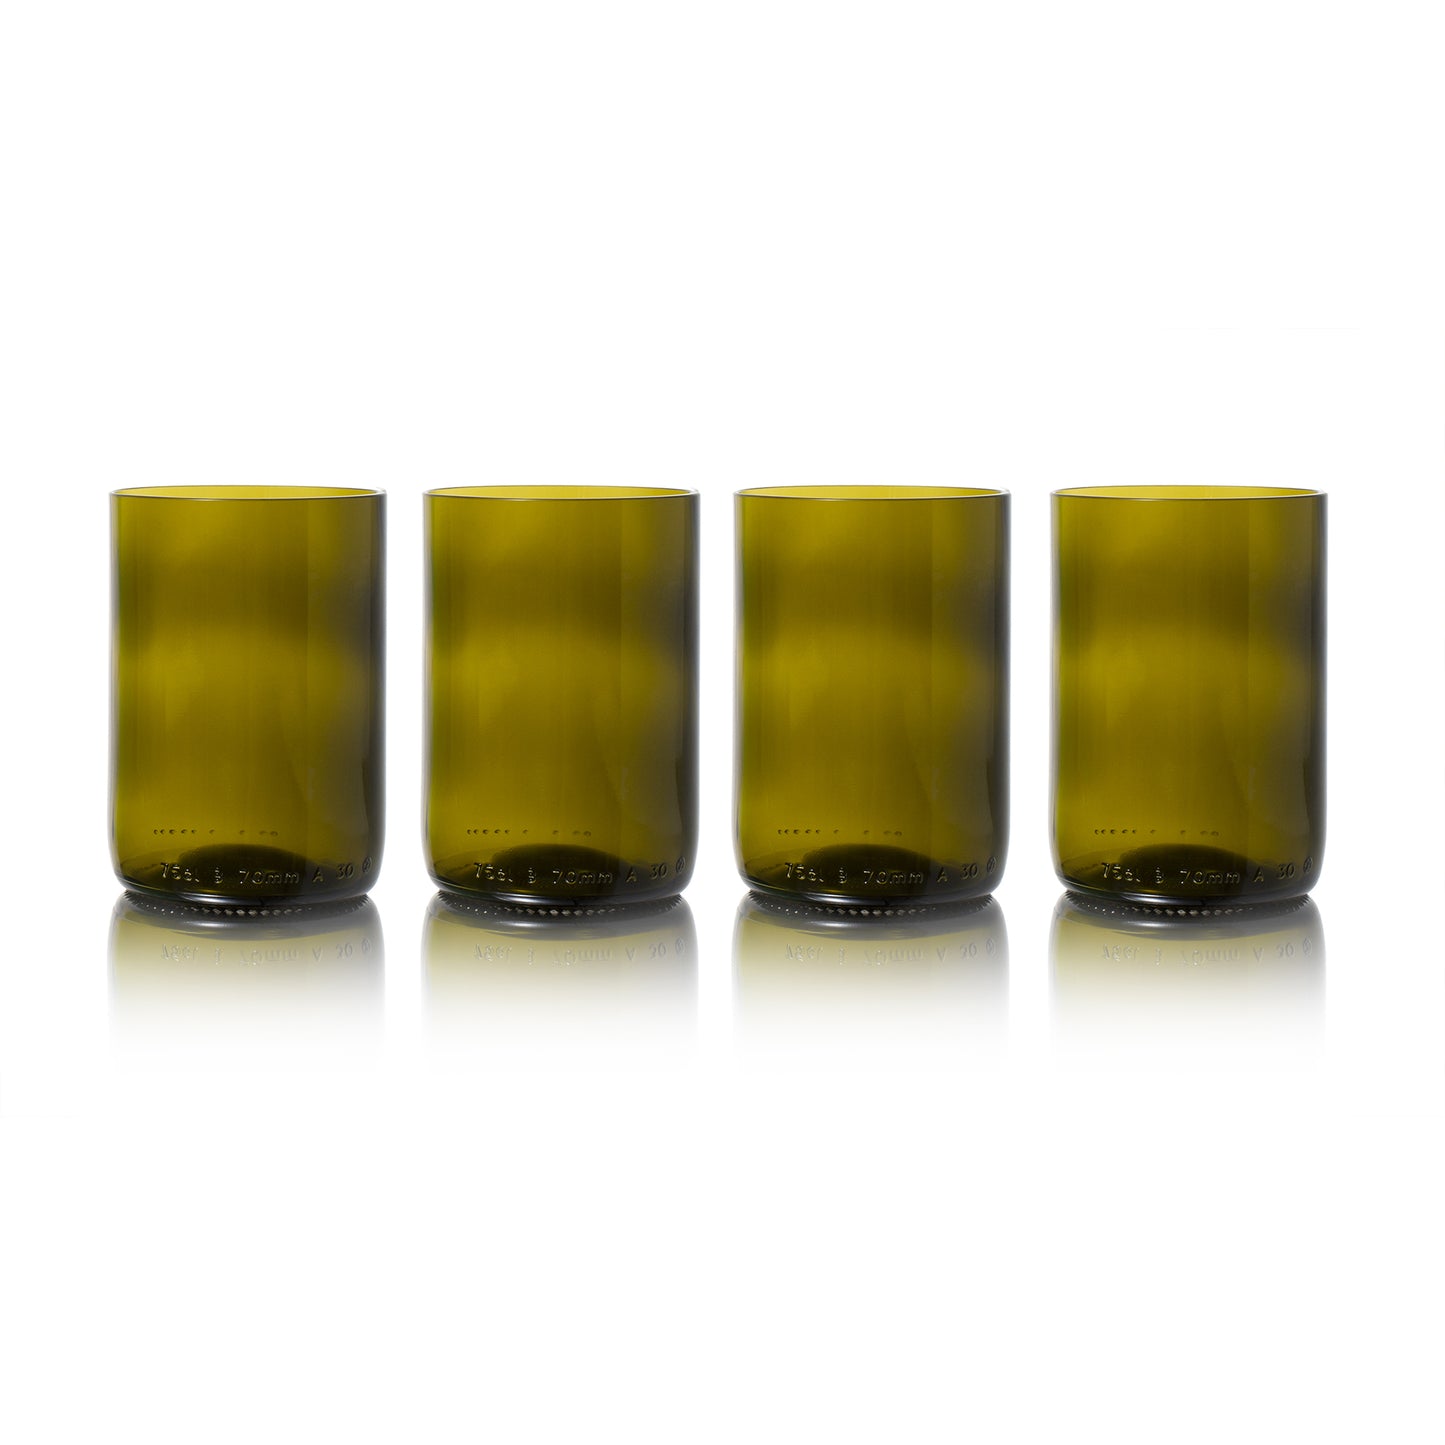 Rebottled sustainable olive tumbler 4-pack